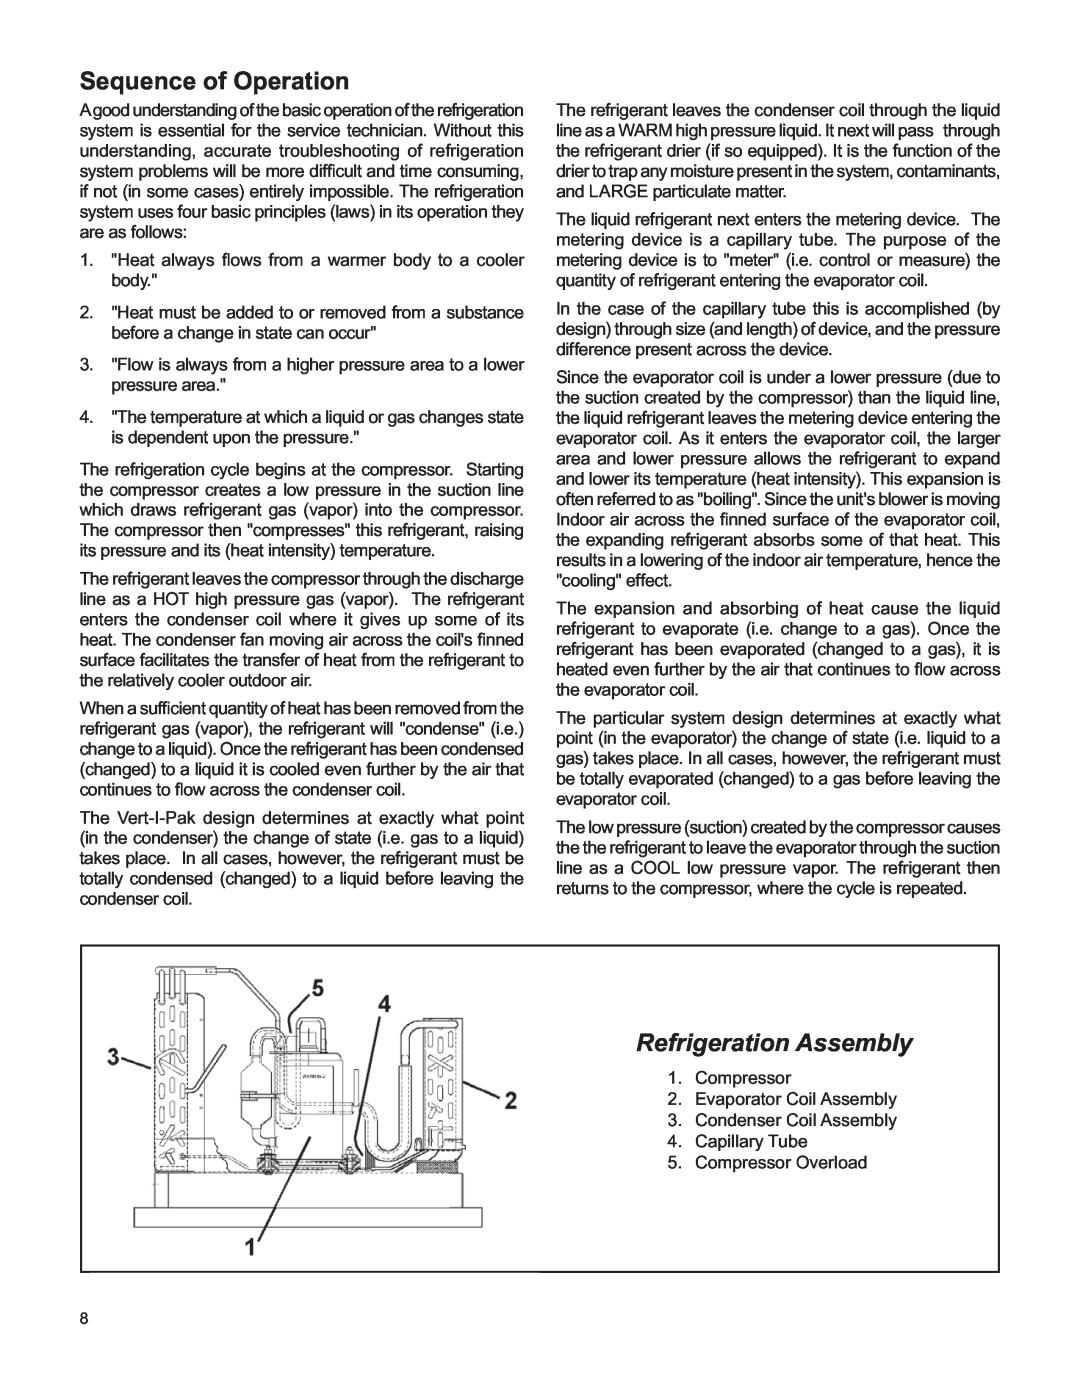 Friedrich H)A09K25, V(E service manual Sequence of Operation, Refrigeration Assembly 